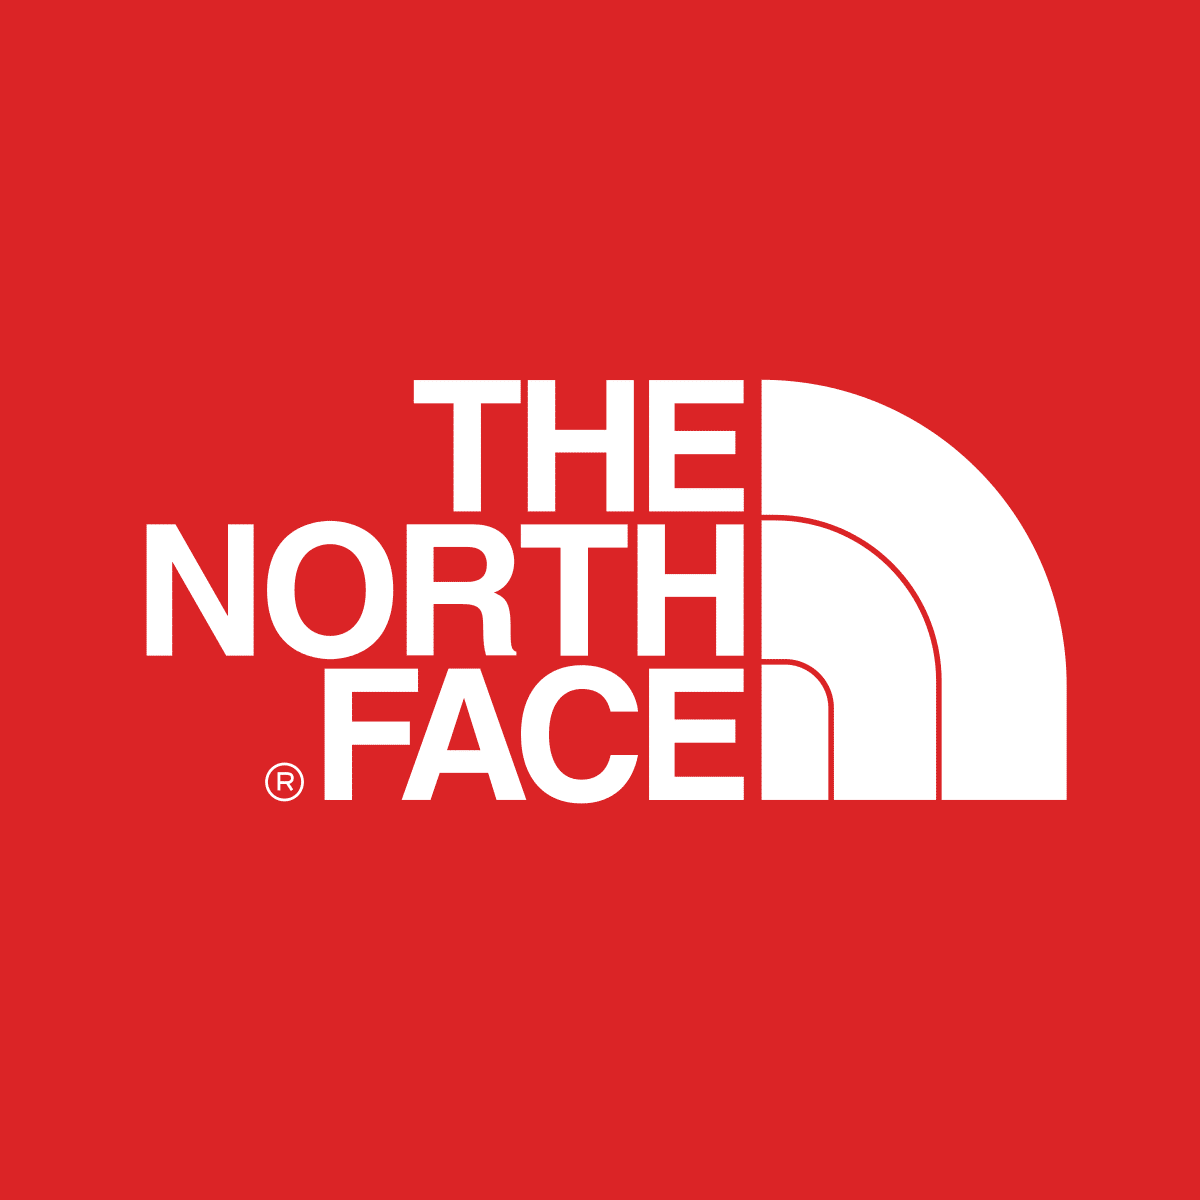 TheNorthFace Logo